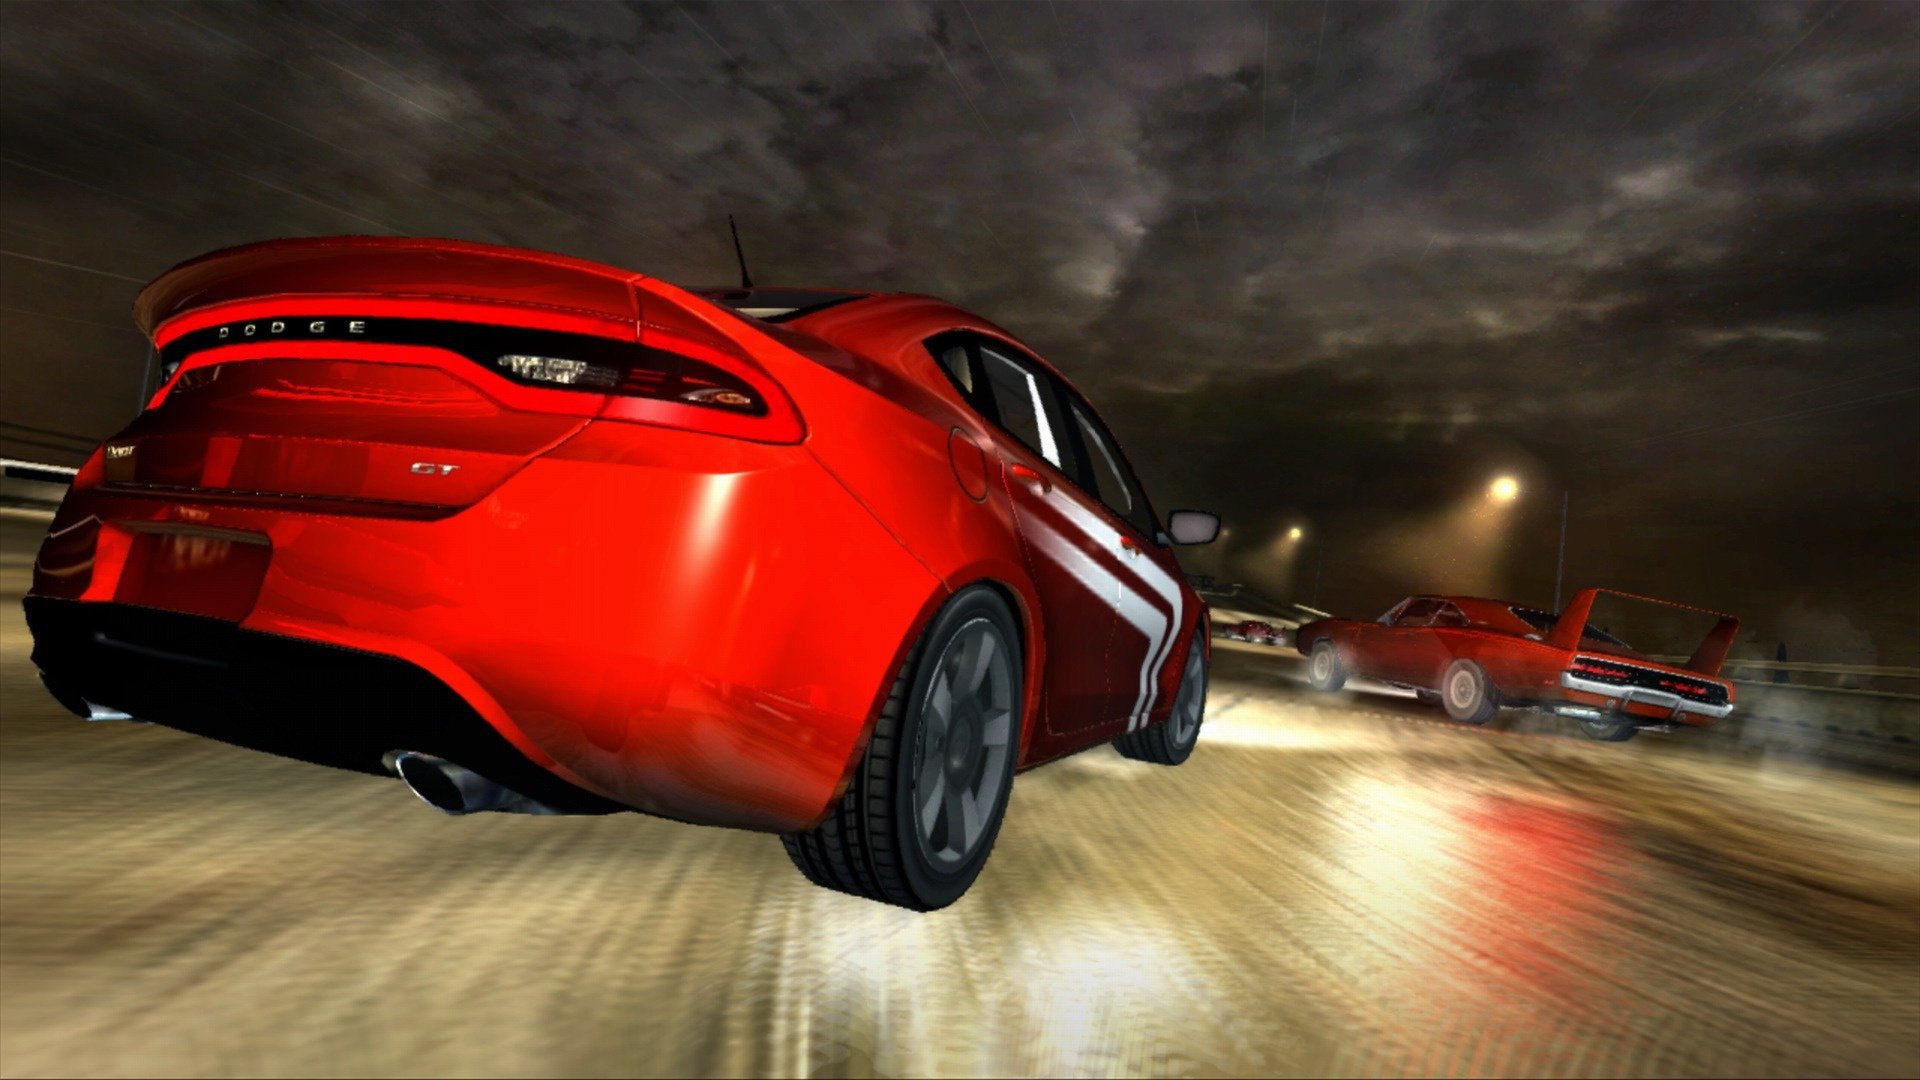 Fast & Furious: Showdown (Wii U) Game Profile | News, Reviews, Videos - Fast & Furious Hobbs & Shaw Besetzung